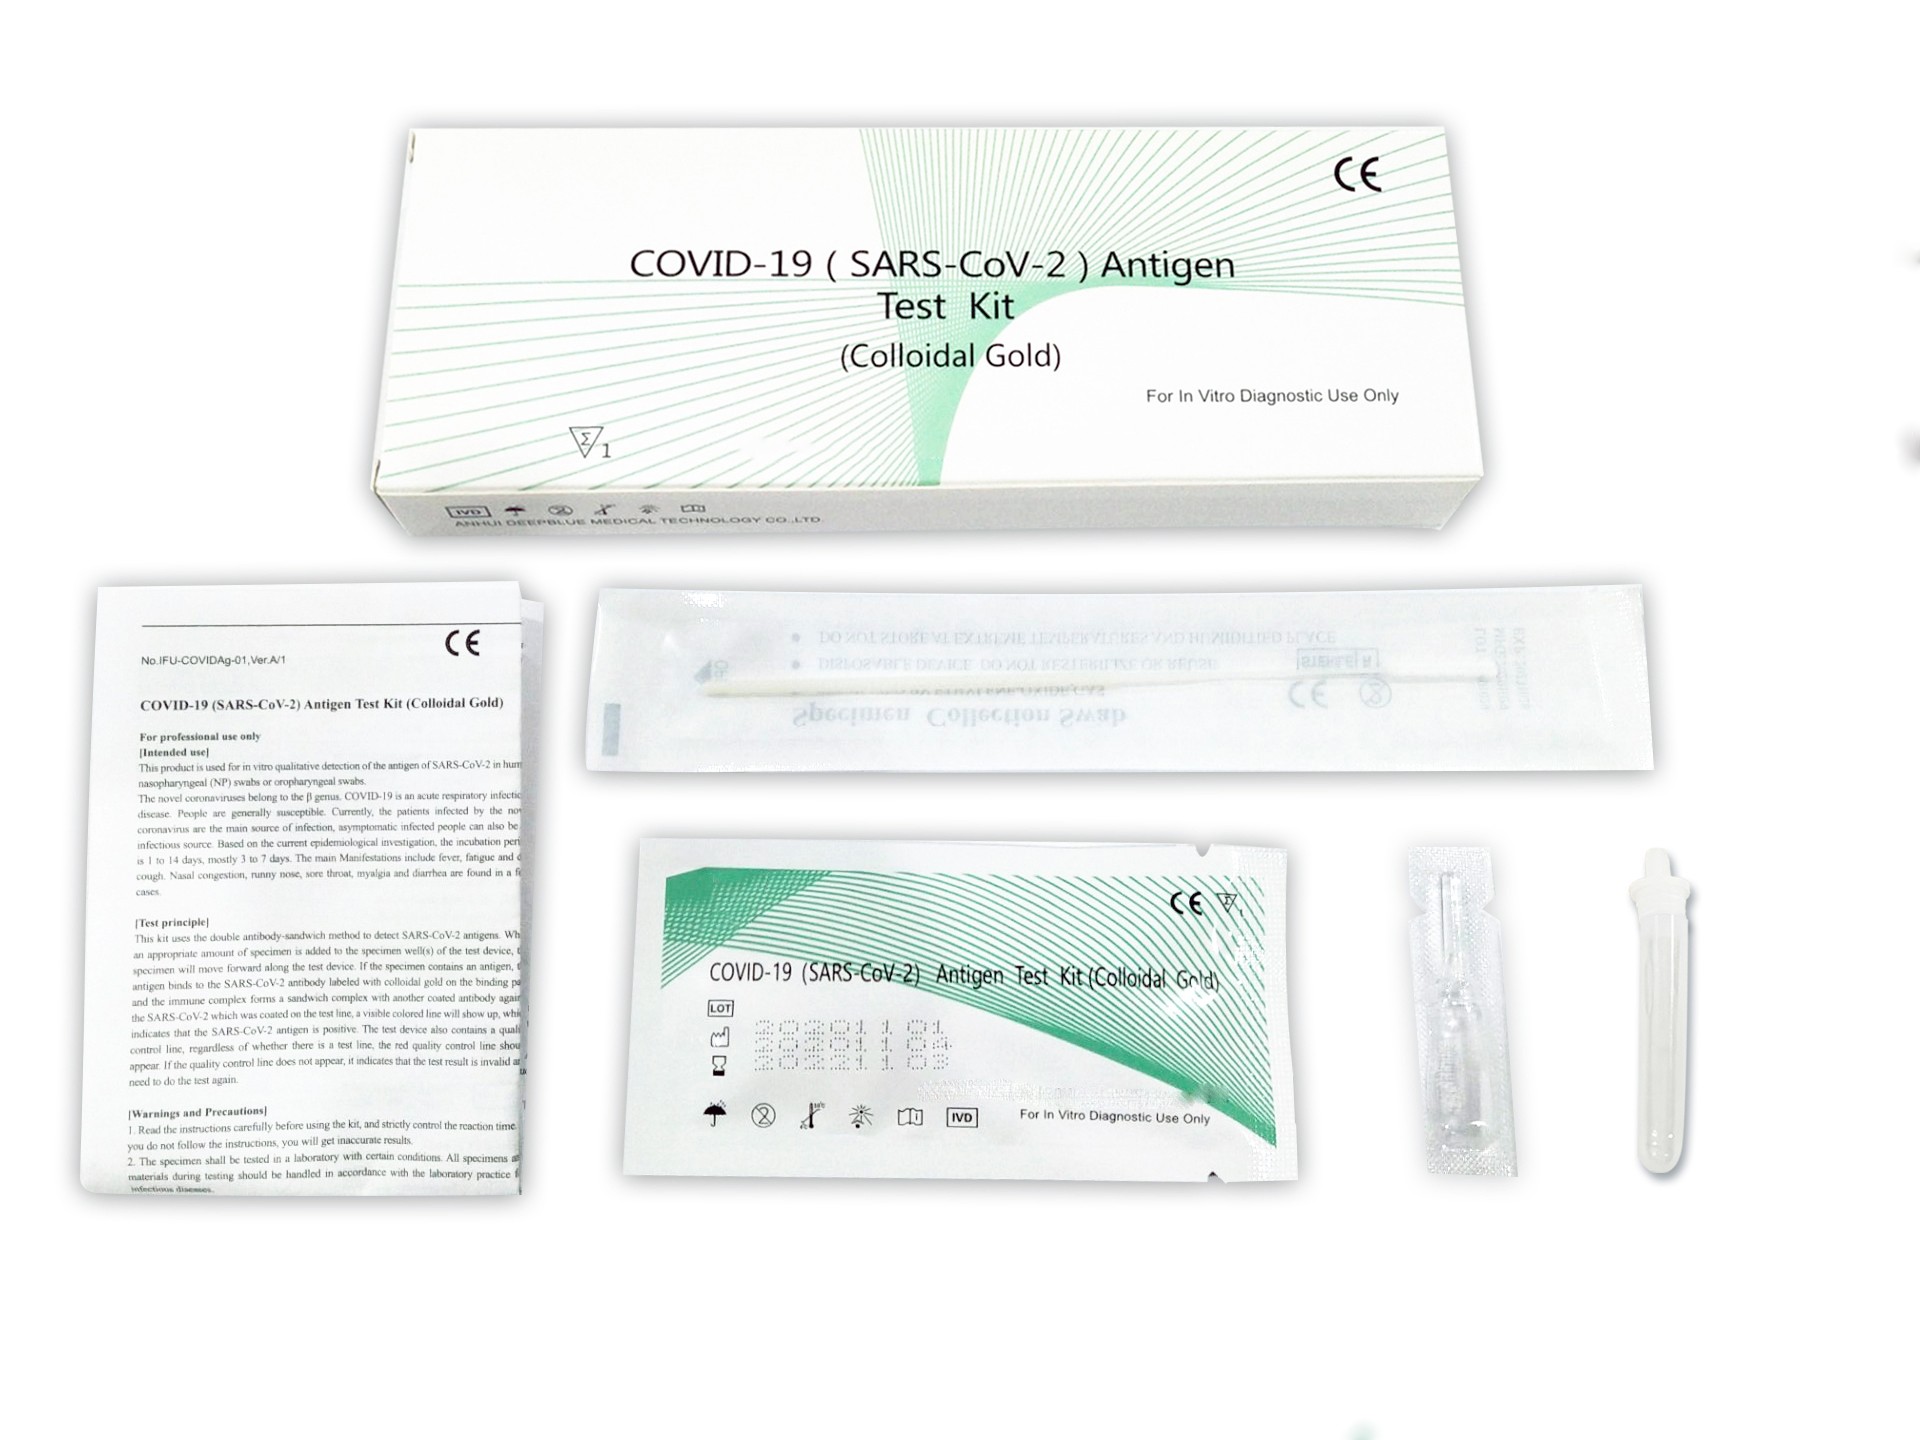 COVID-19 (SARS-CoV-2) Antigen Test kit